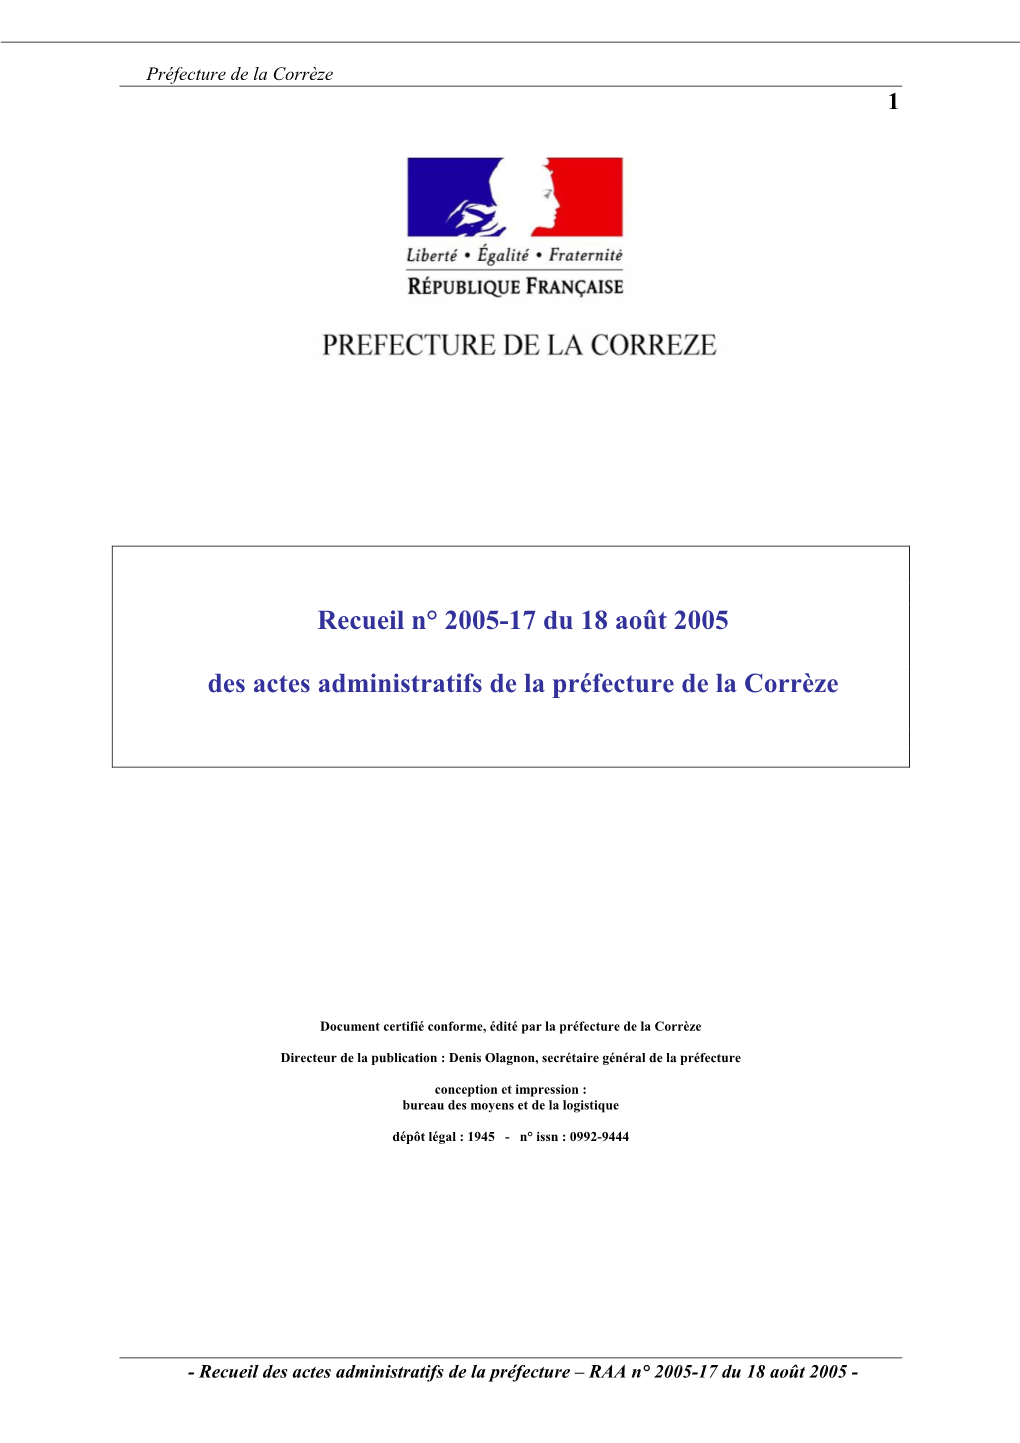 Recueil N° 2005-17 Du 18 Août 2005 Des Actes Administratifs De La